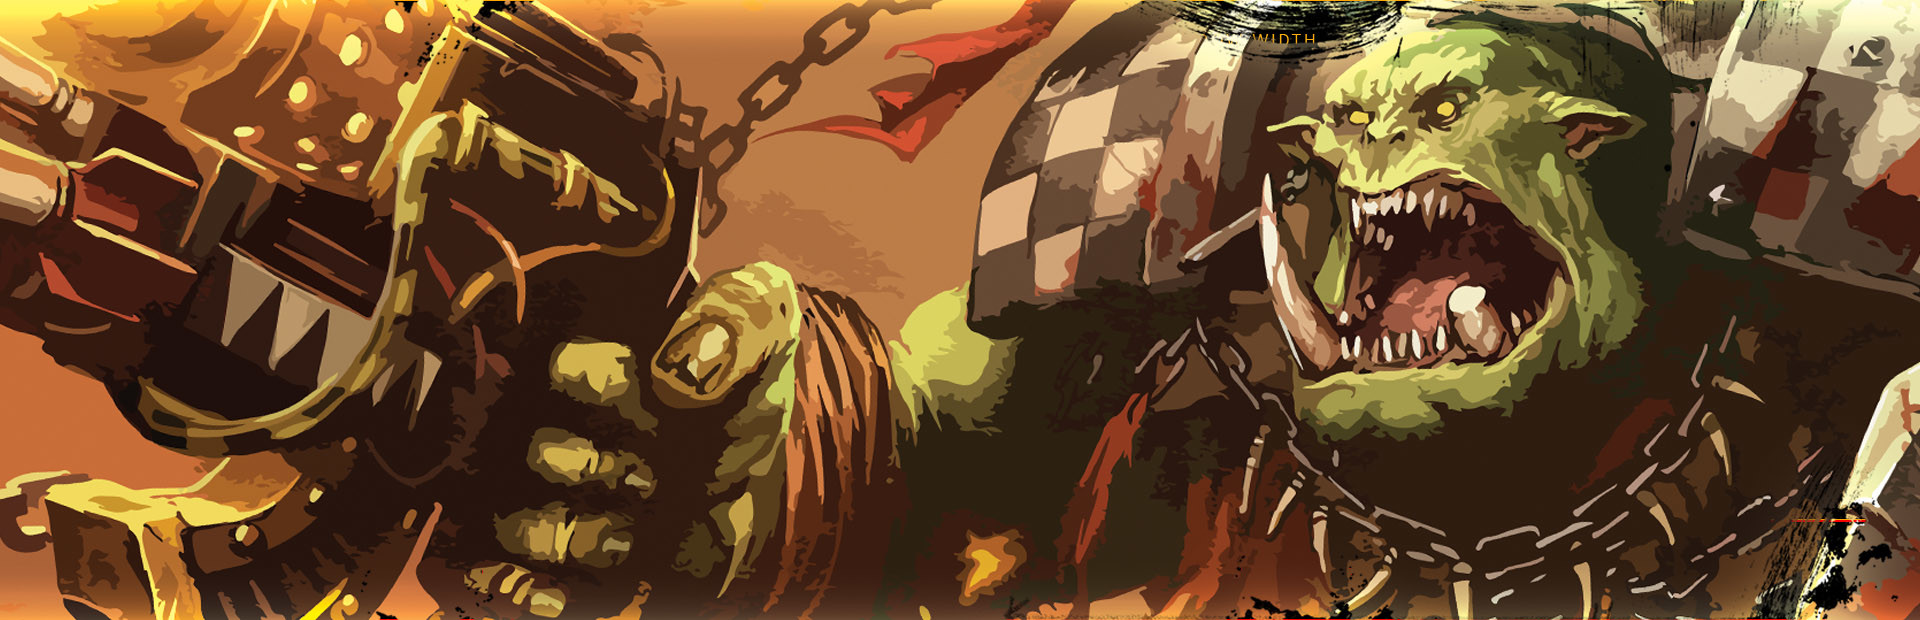 Warhammer 40,000: Sanctus Reach cover image